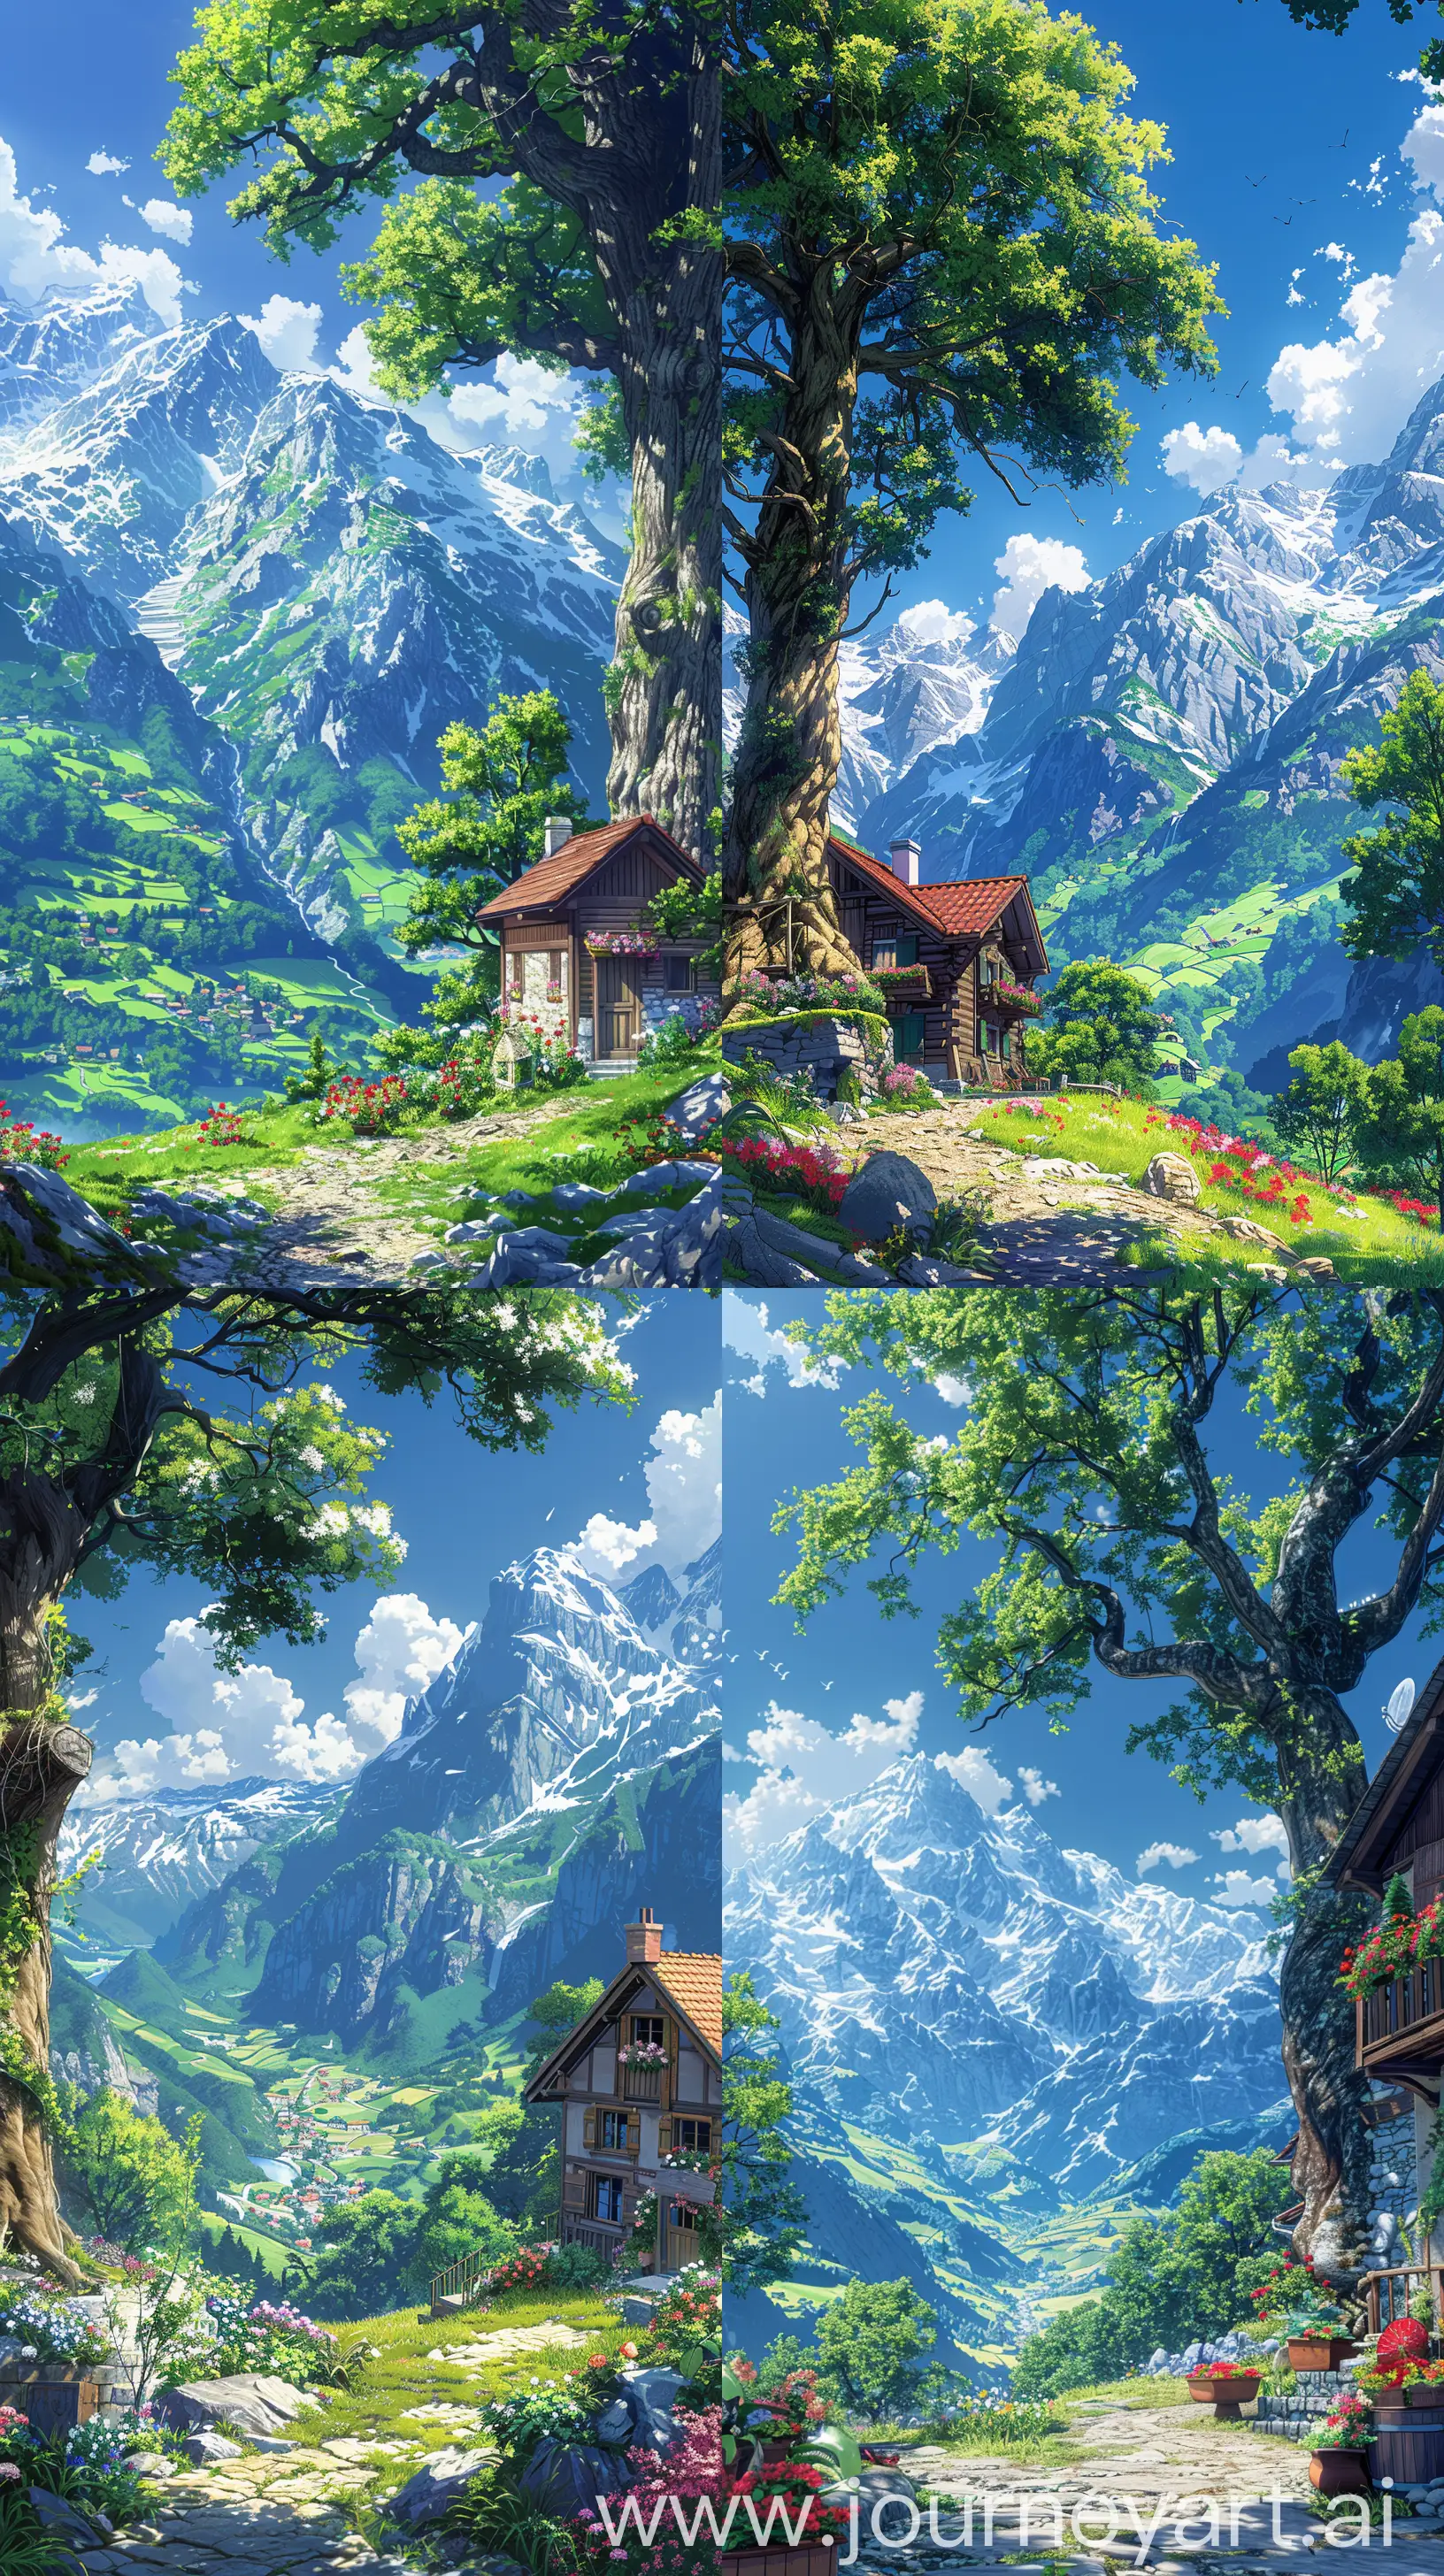 Beautiful-Swiss-Mountain-Cottage-in-Makoto-Shinkai-Style-Anime-Scenery